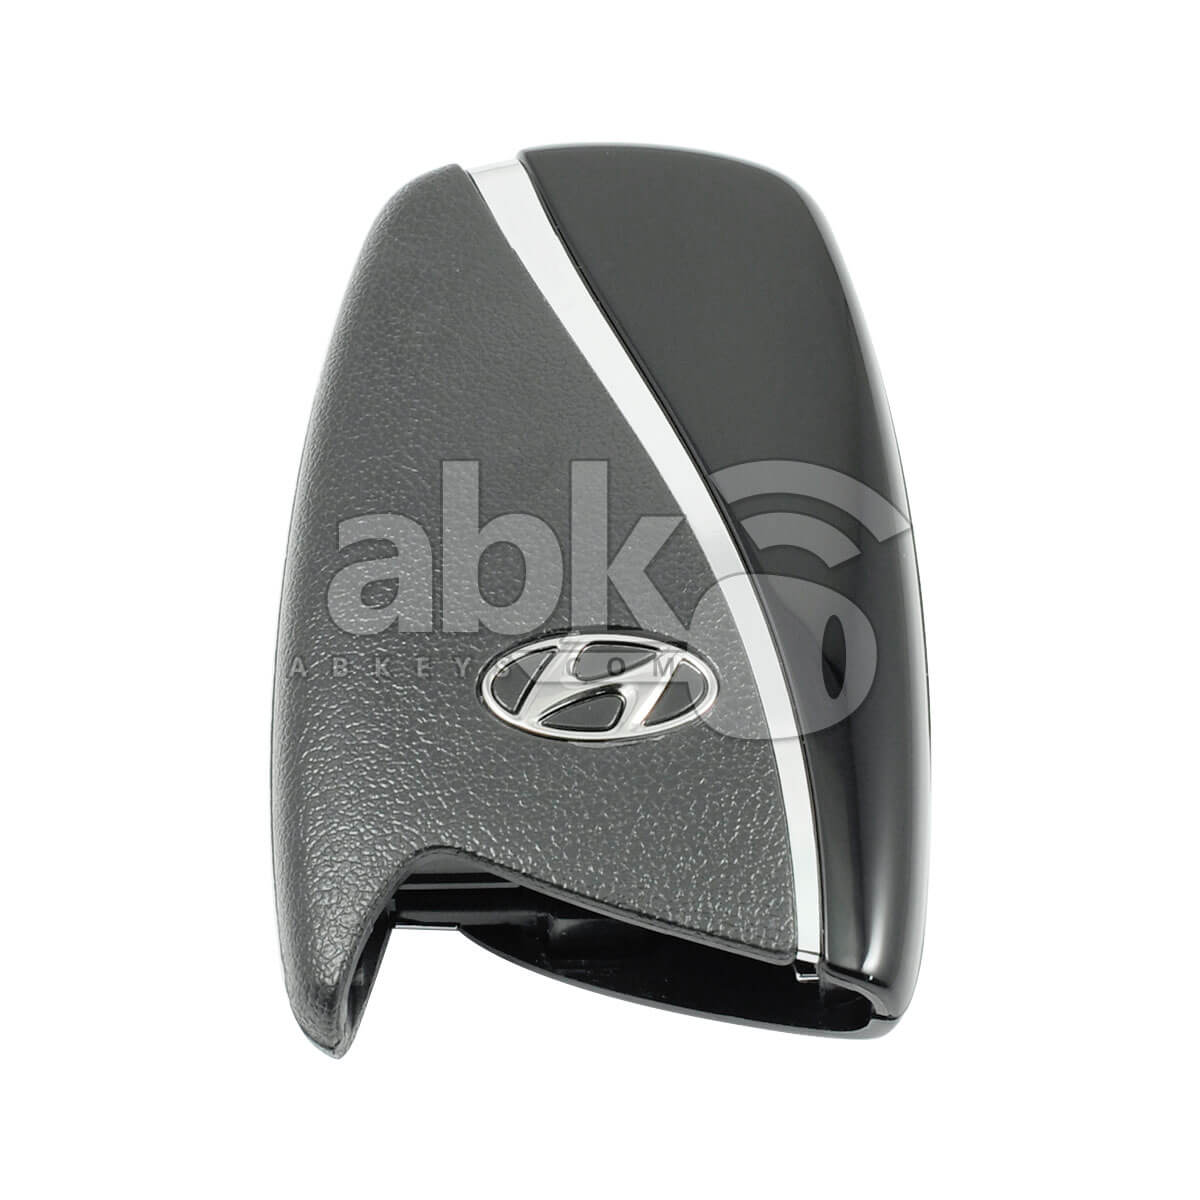 Genuine Hyundai Azera 2012+ Smart Key 3Buttons SEKS-HG11BOB 433MHz 95440-3V015 - ABK-3222 - 